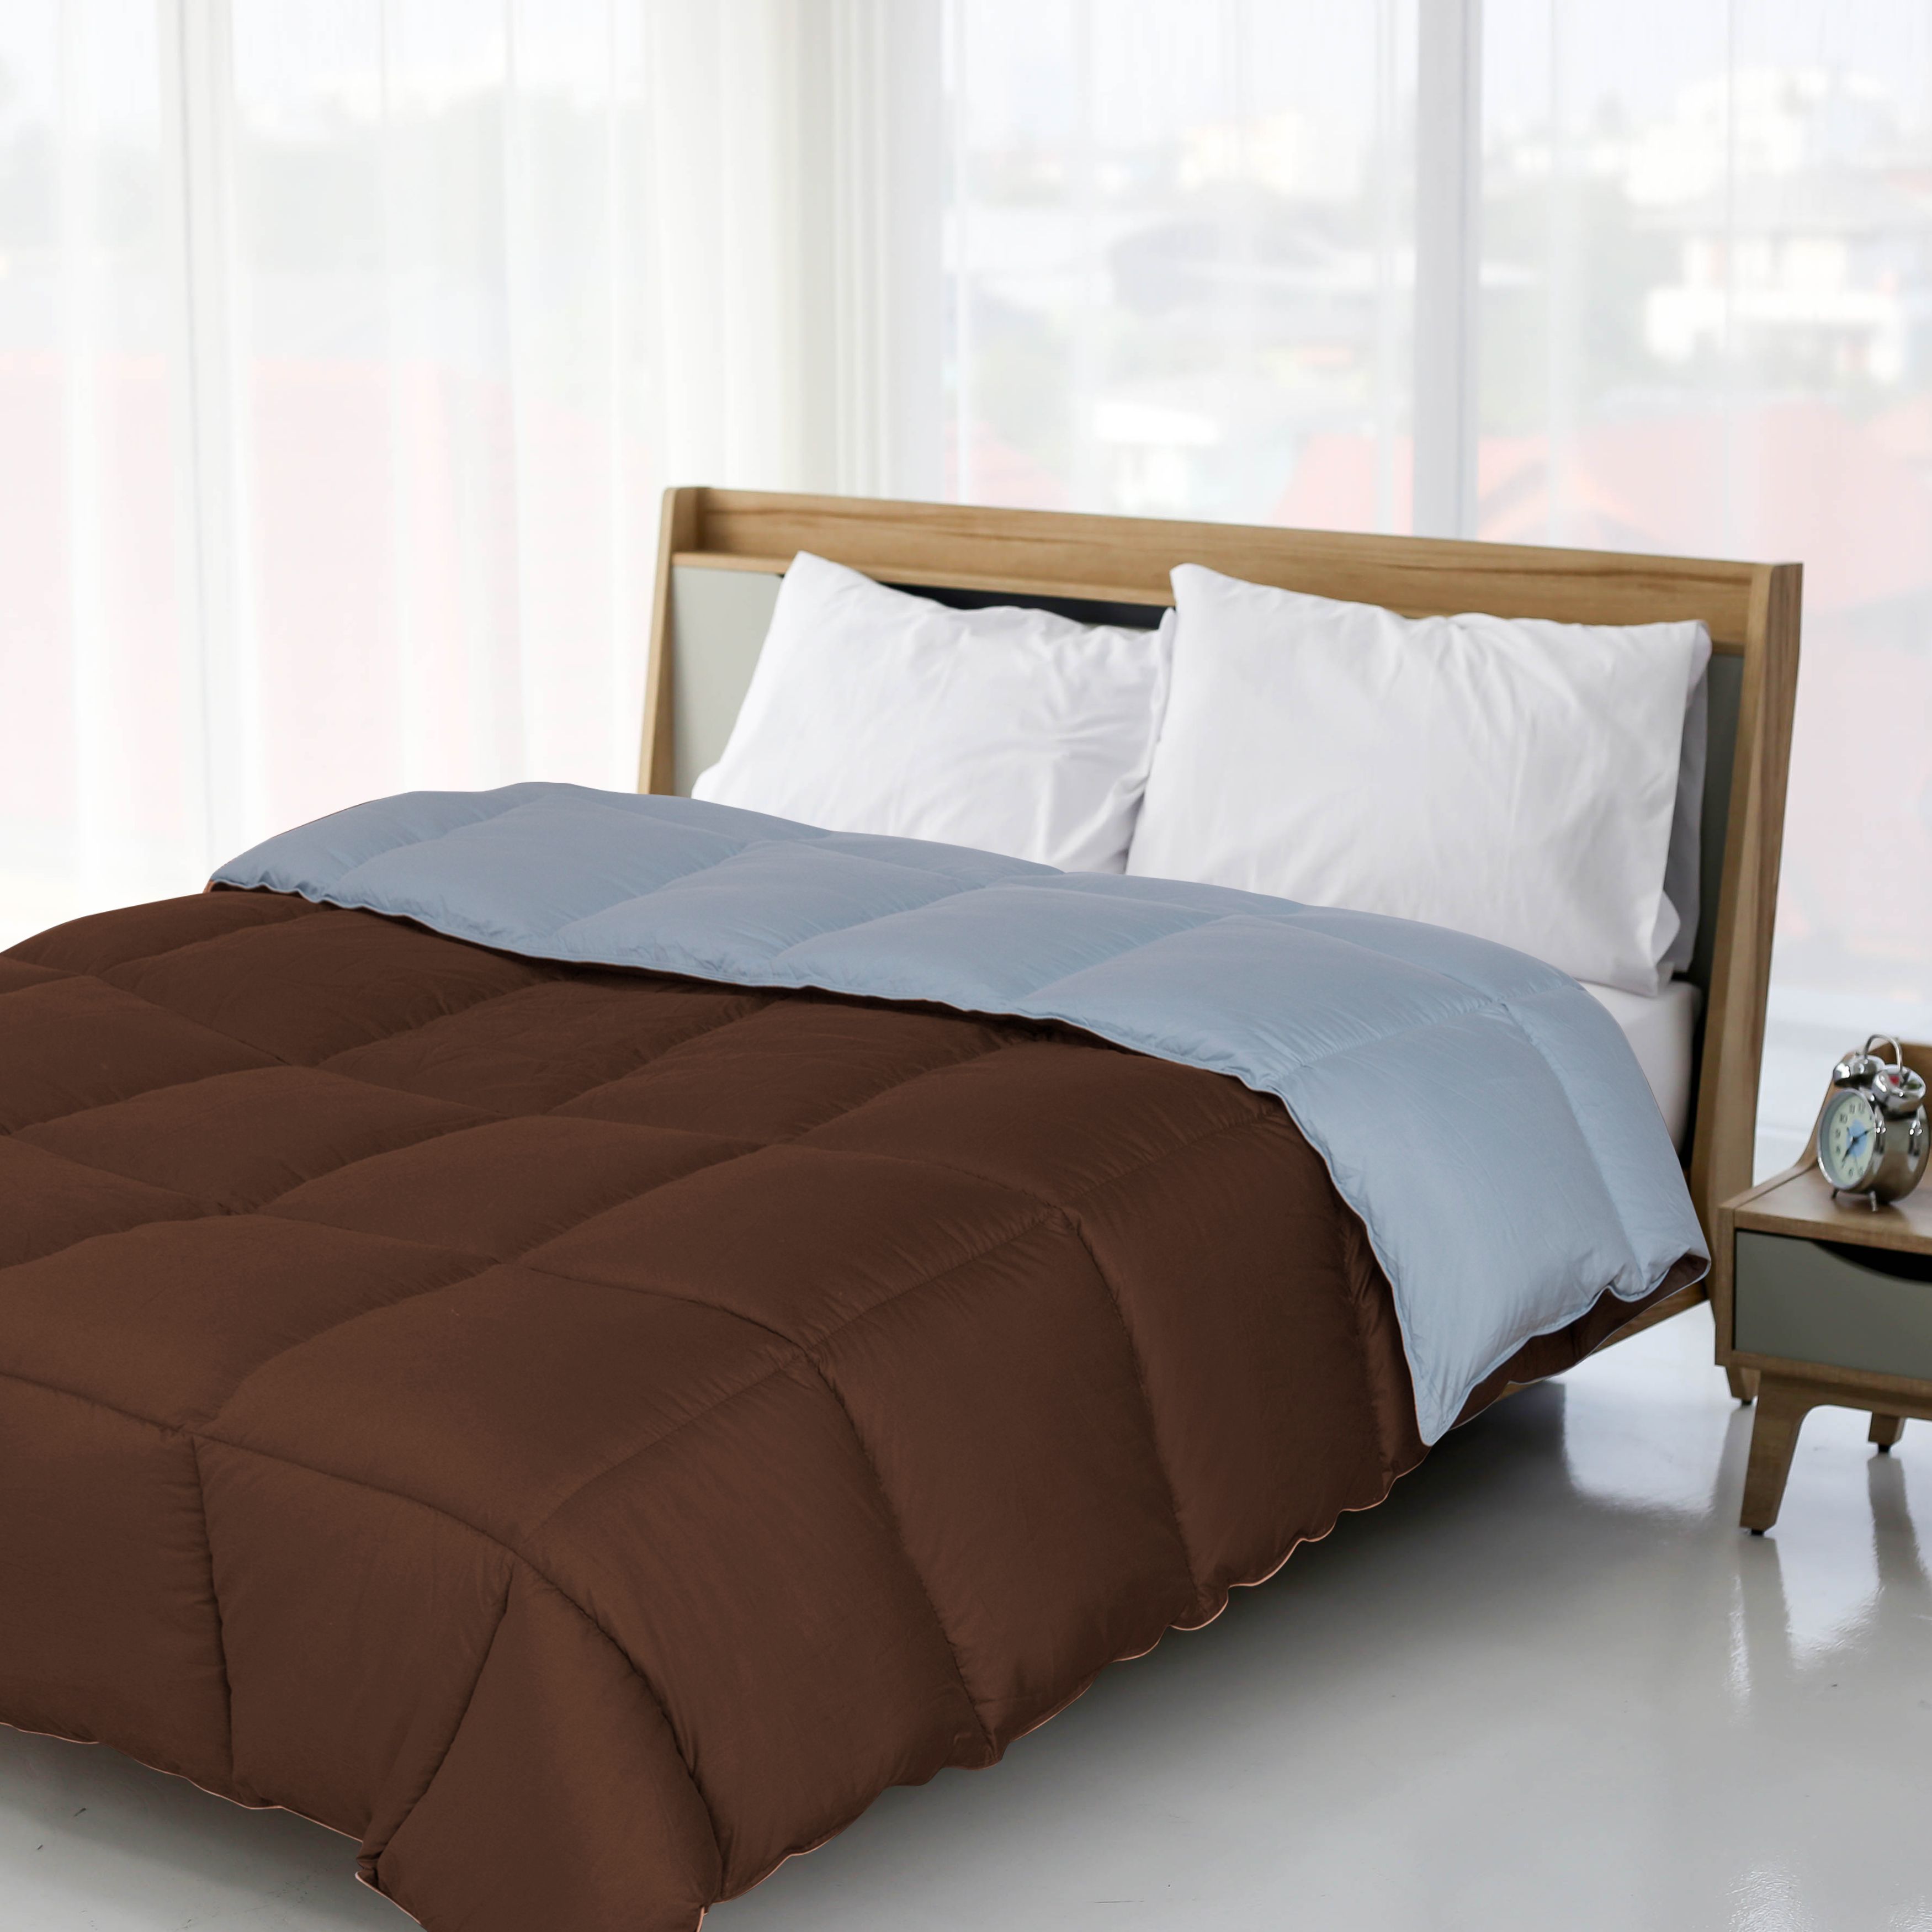 Superior Down Alternative Reversible Comforter, Full/ Queen, Choco/ Sky Blue - image 2 of 3